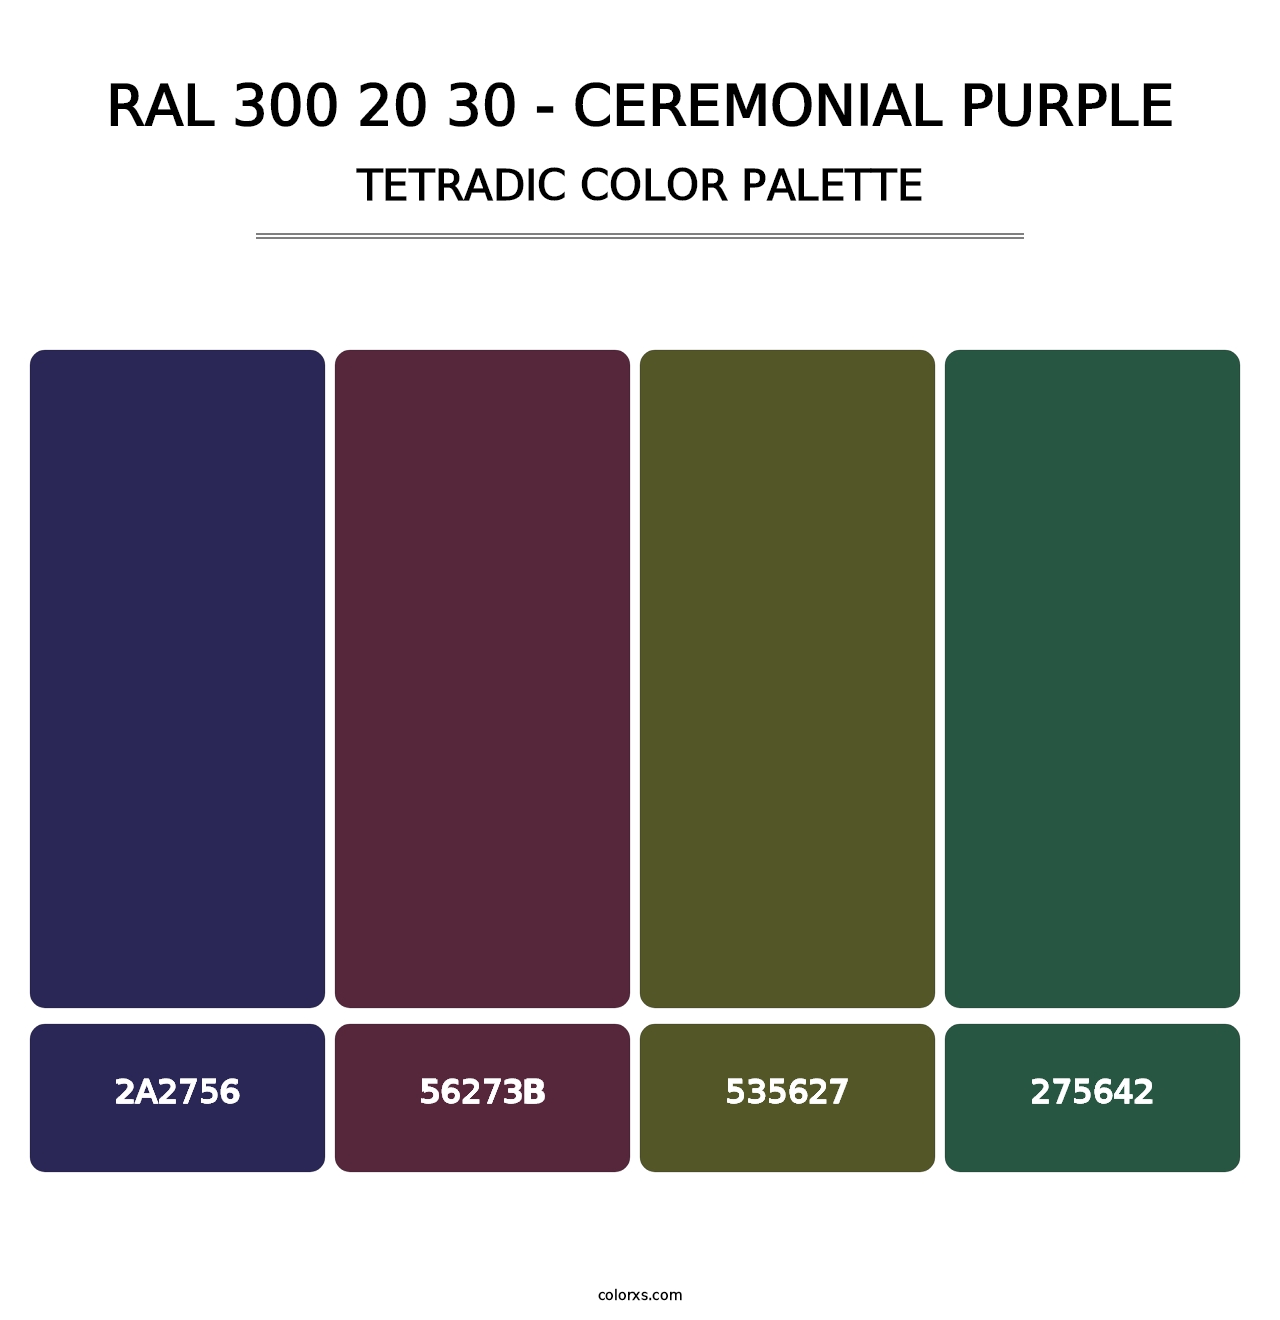 RAL 300 20 30 - Ceremonial Purple - Tetradic Color Palette